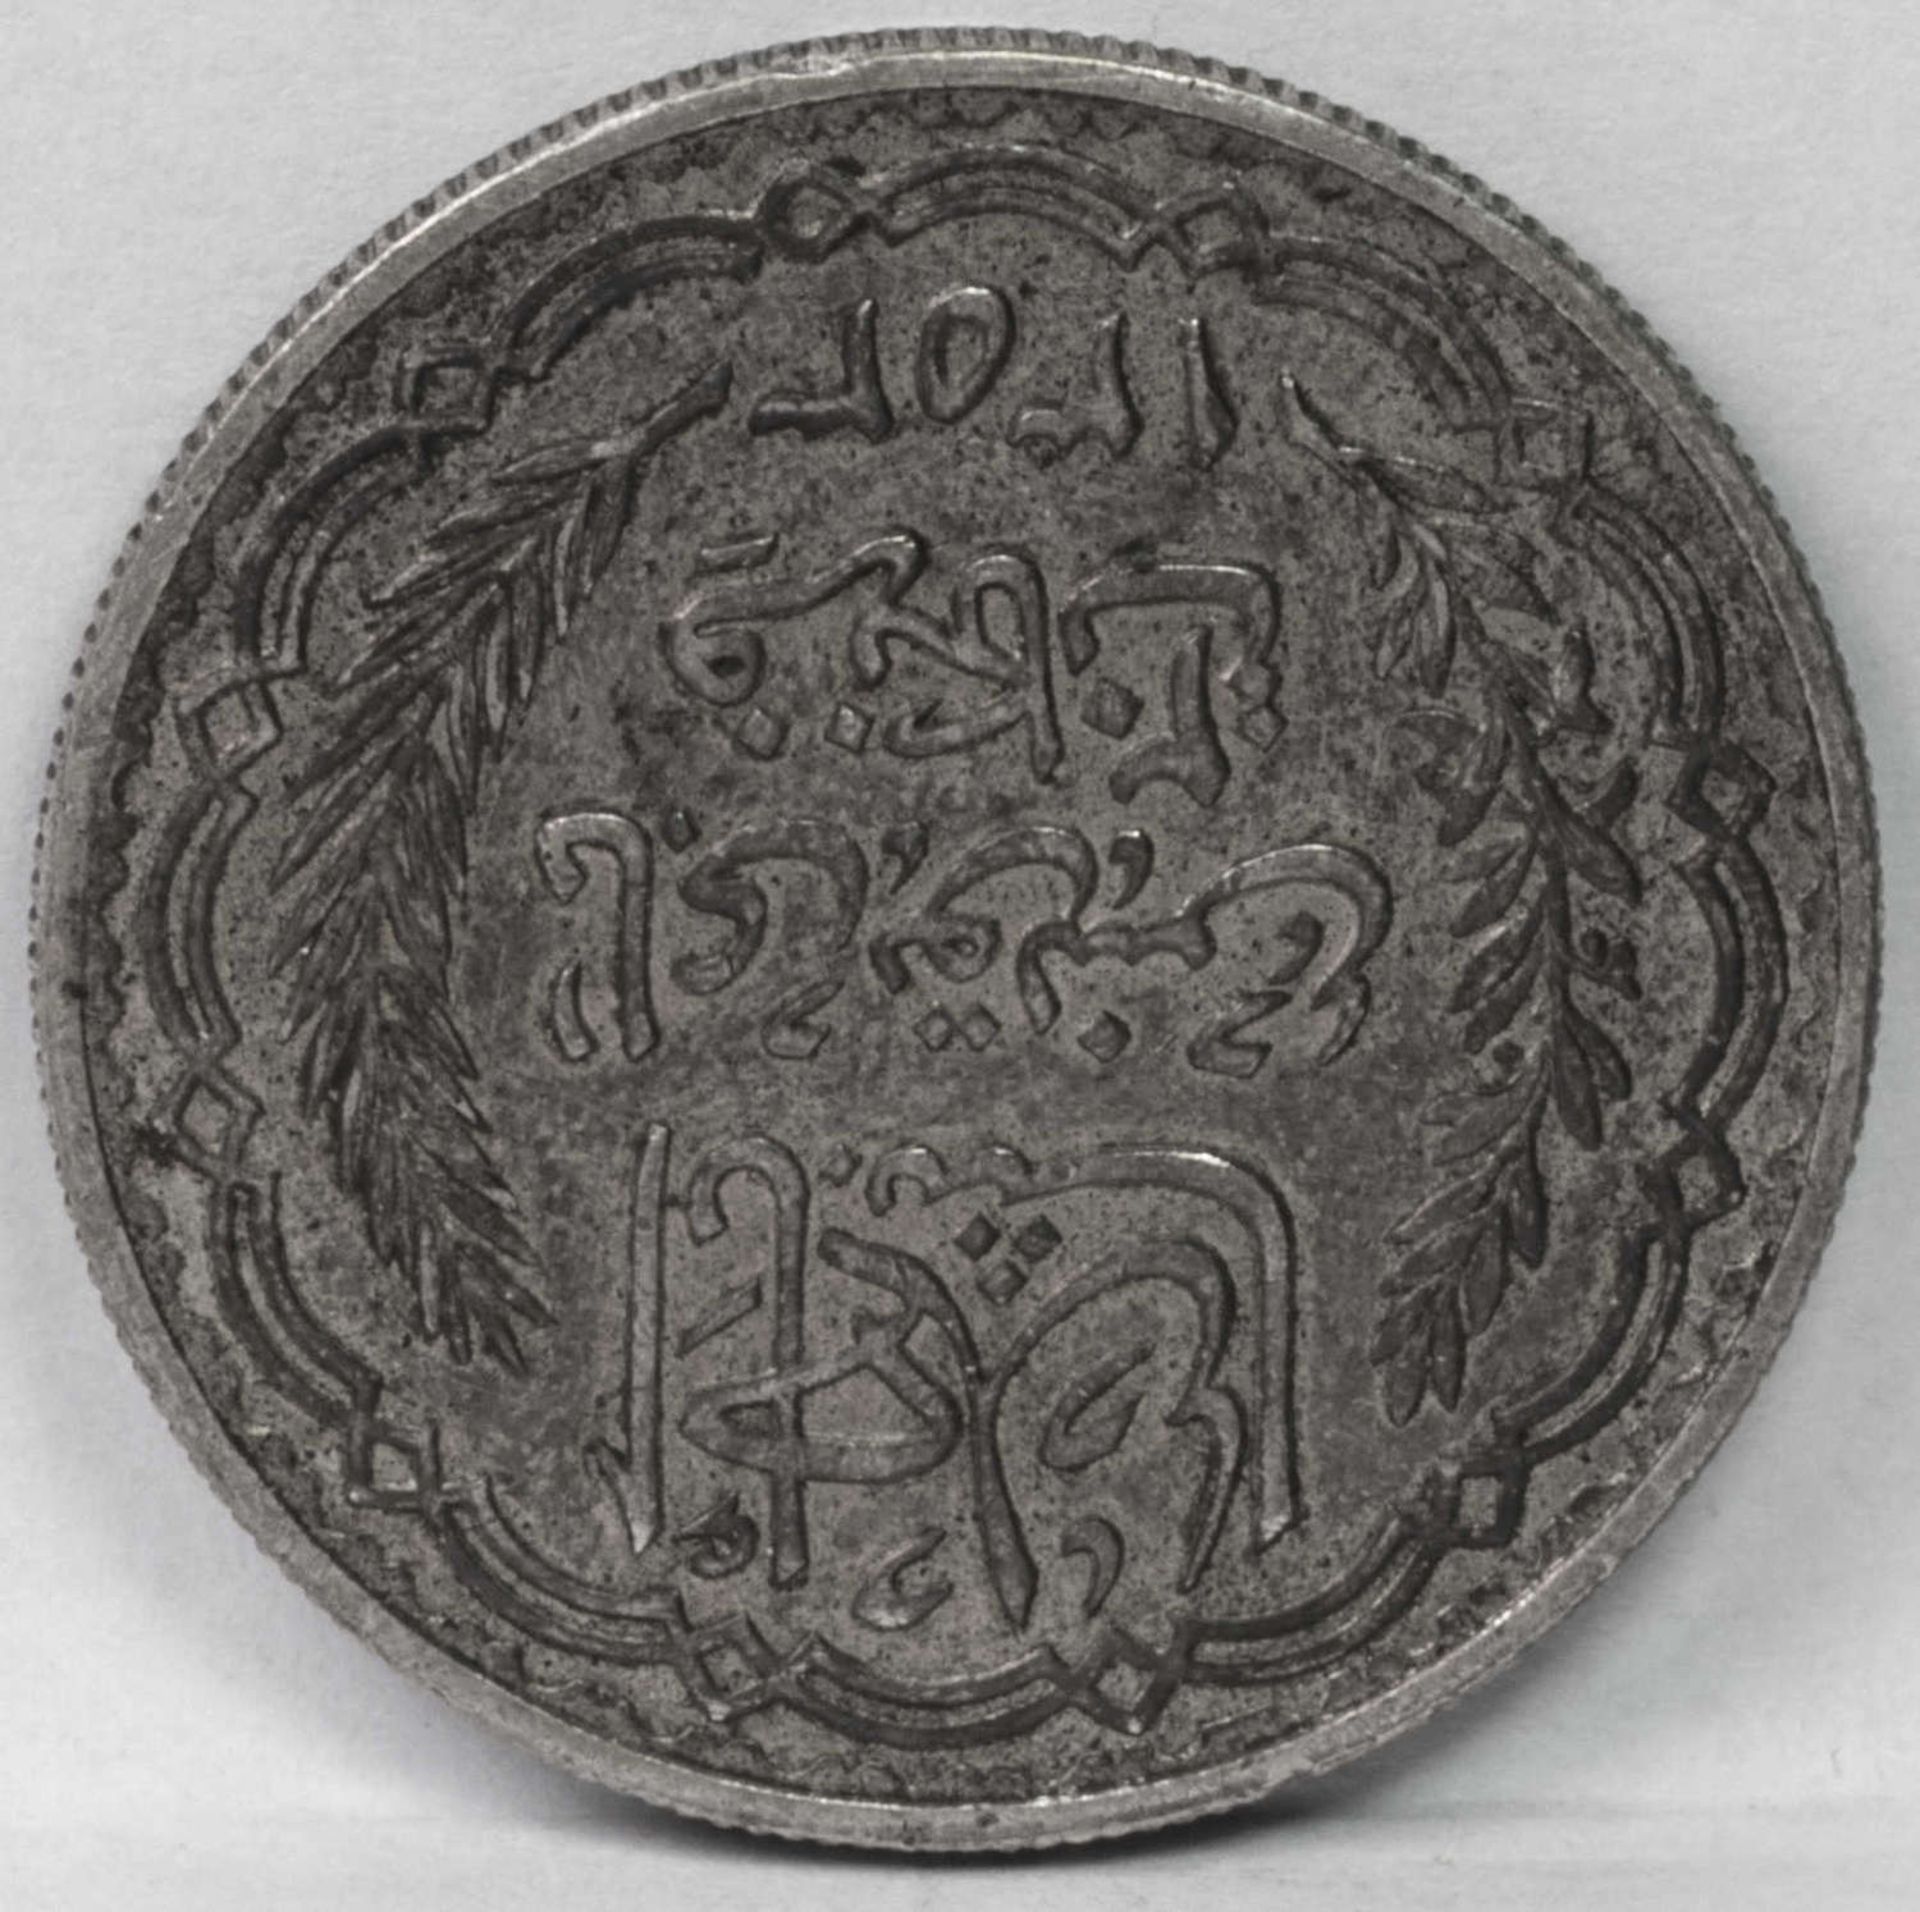 Tunesien AH 1353, 20.- Francs - Silbermünze, Ahmand Pasha Bey. Qualität: ss. - Bild 2 aus 2